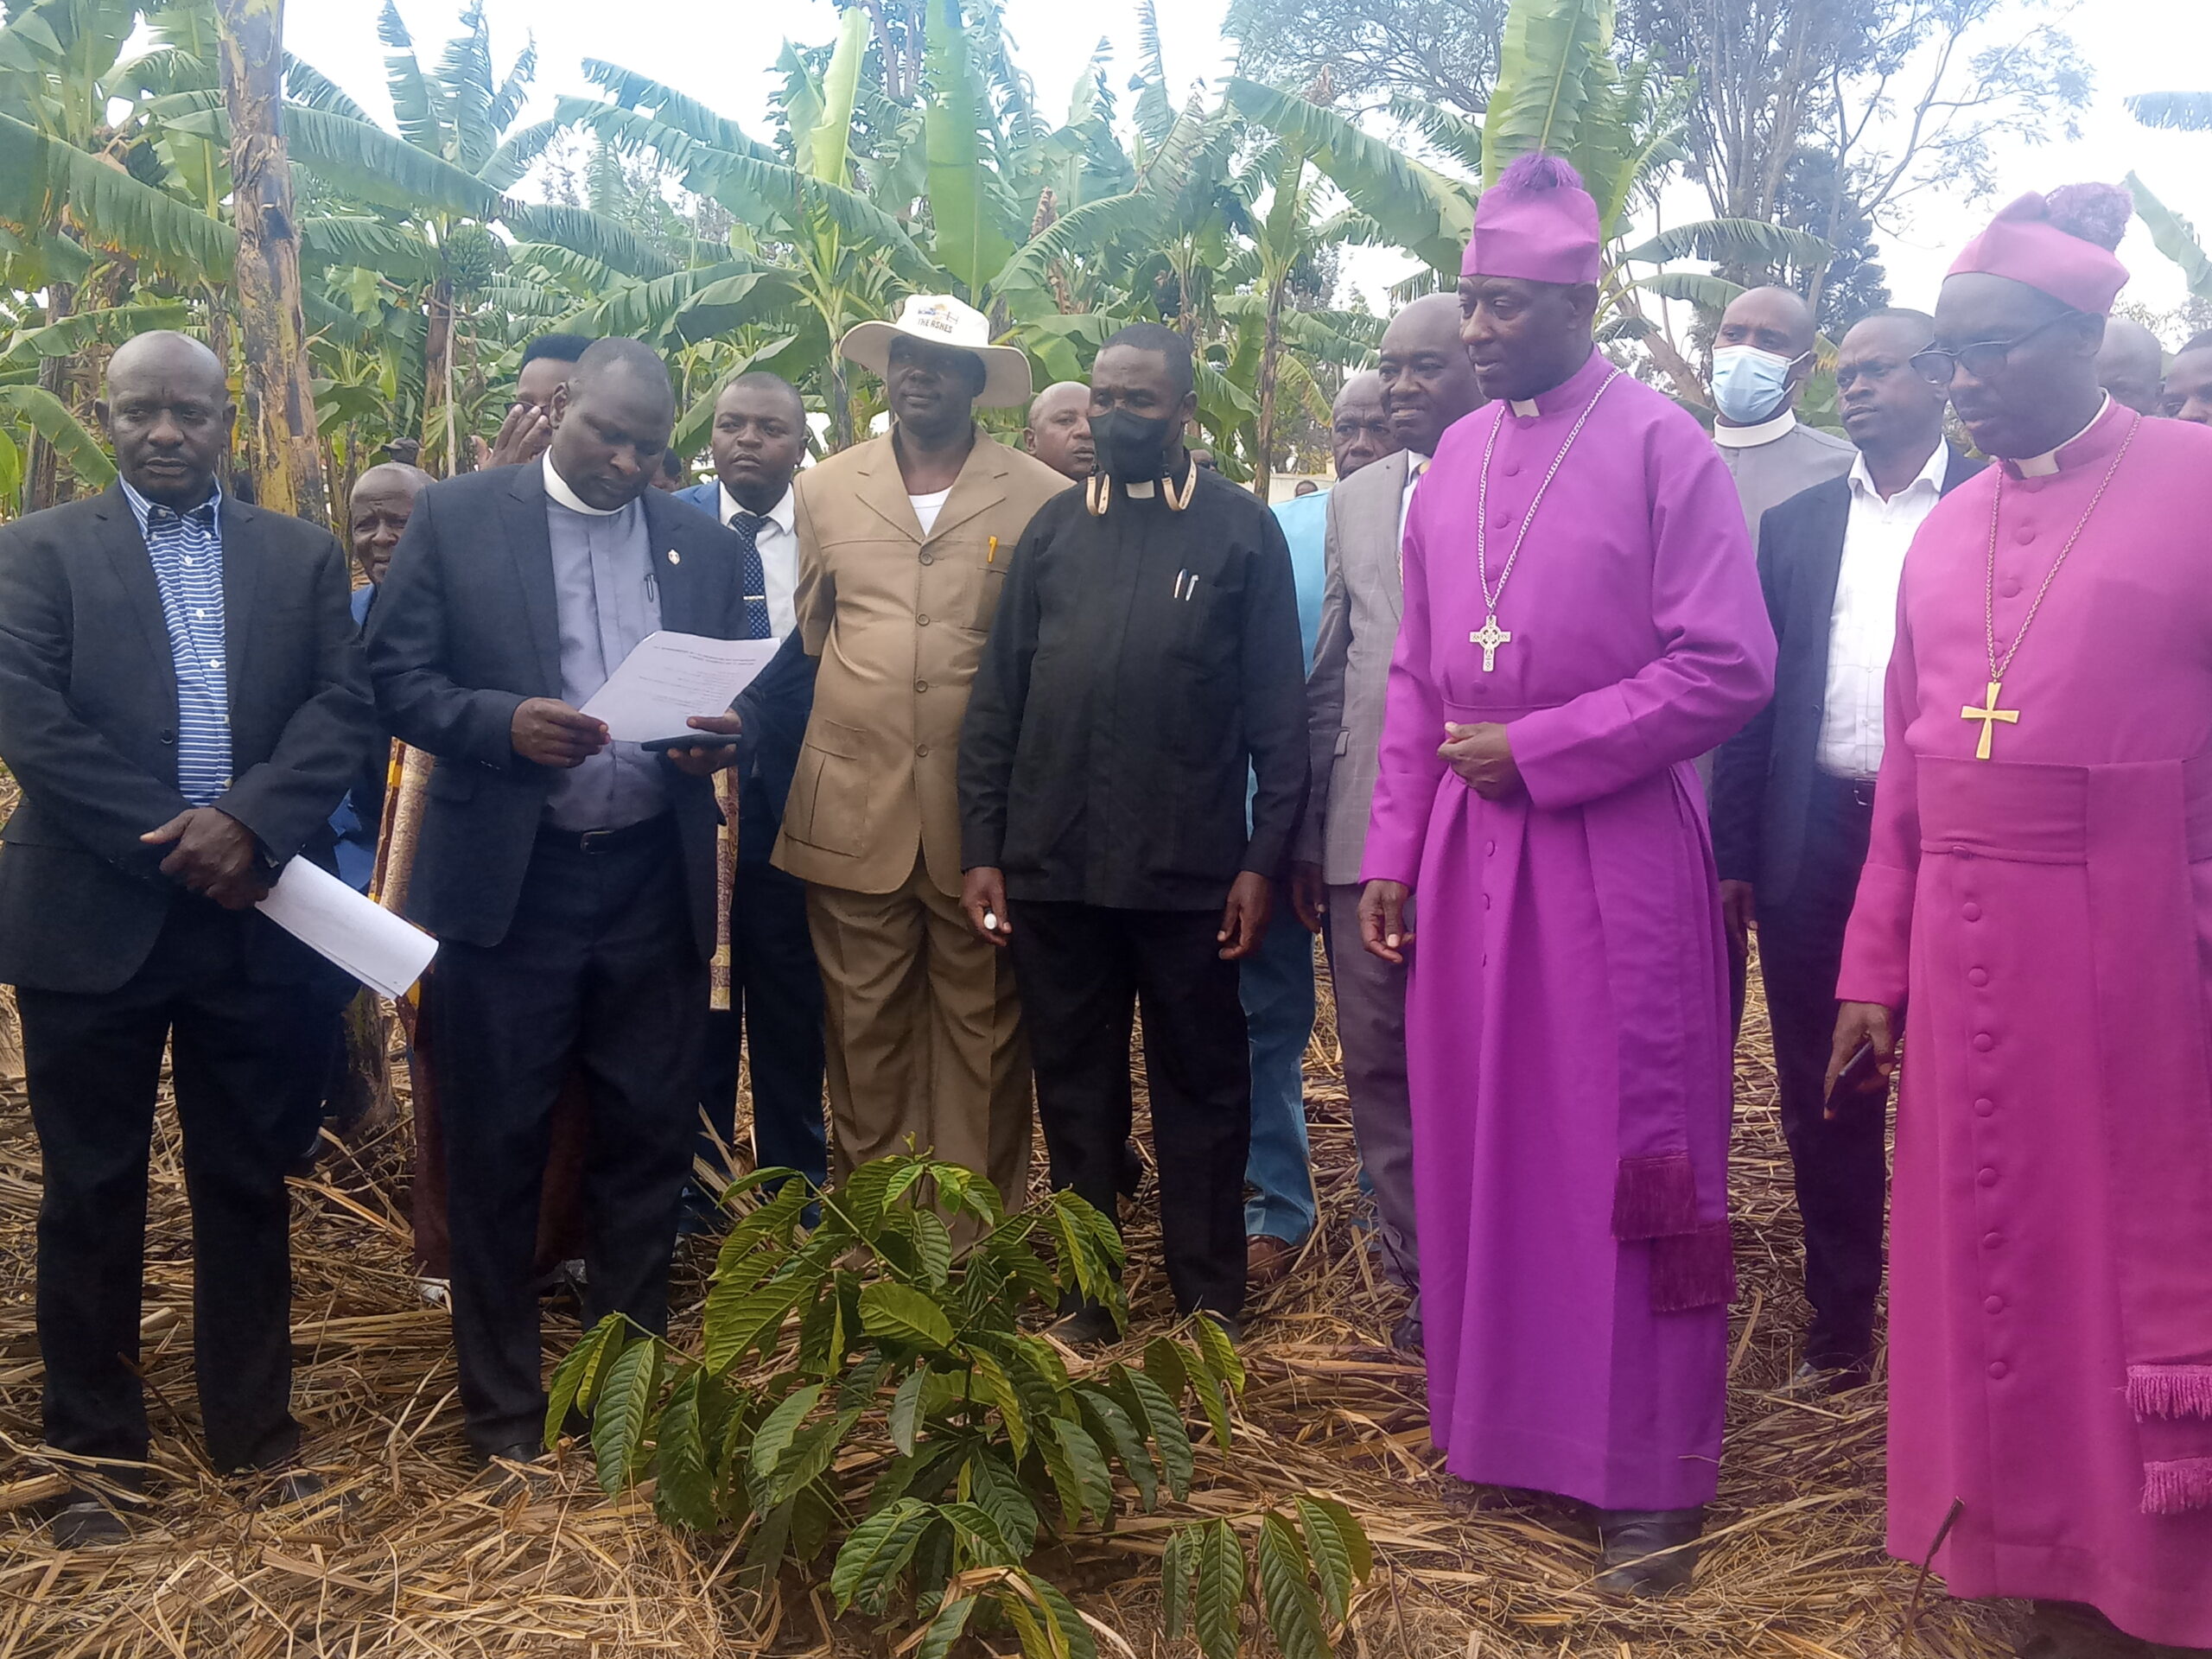 Stay Away From Church Properties – Archbishop Kaziimba Warns Land Grabbers 